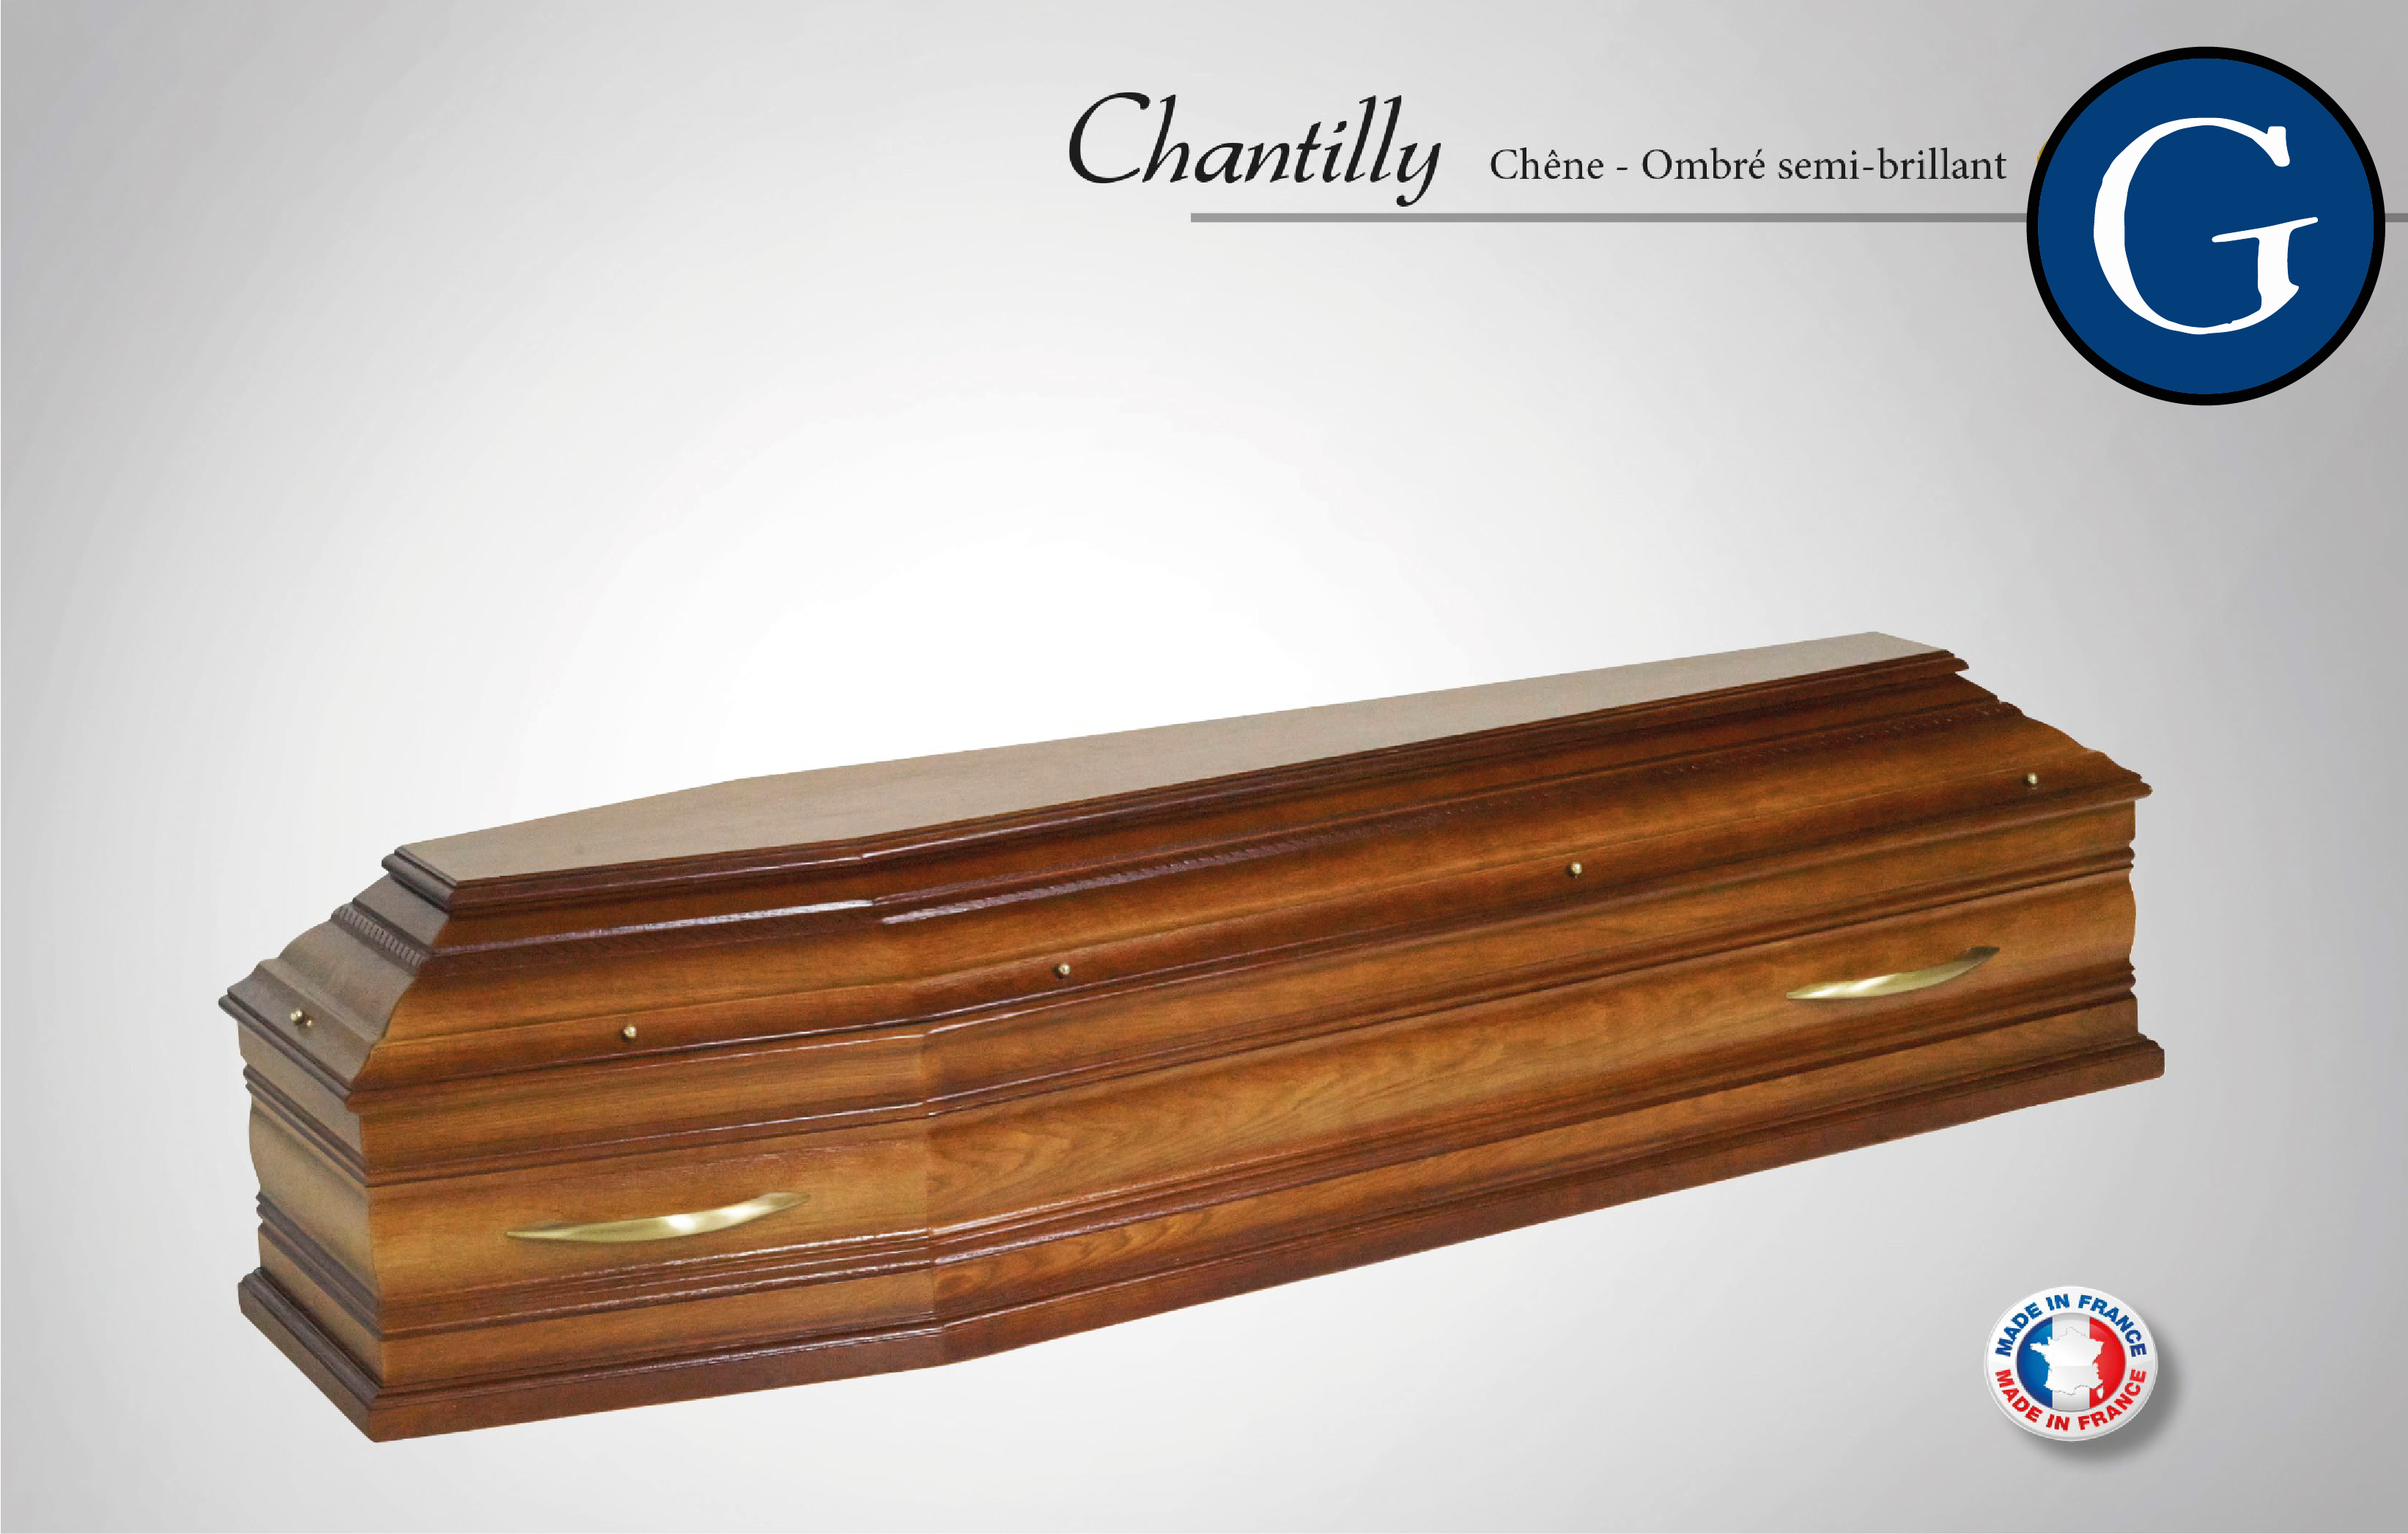 Cercueil Chantilly - Chêne ombré semi-brillant